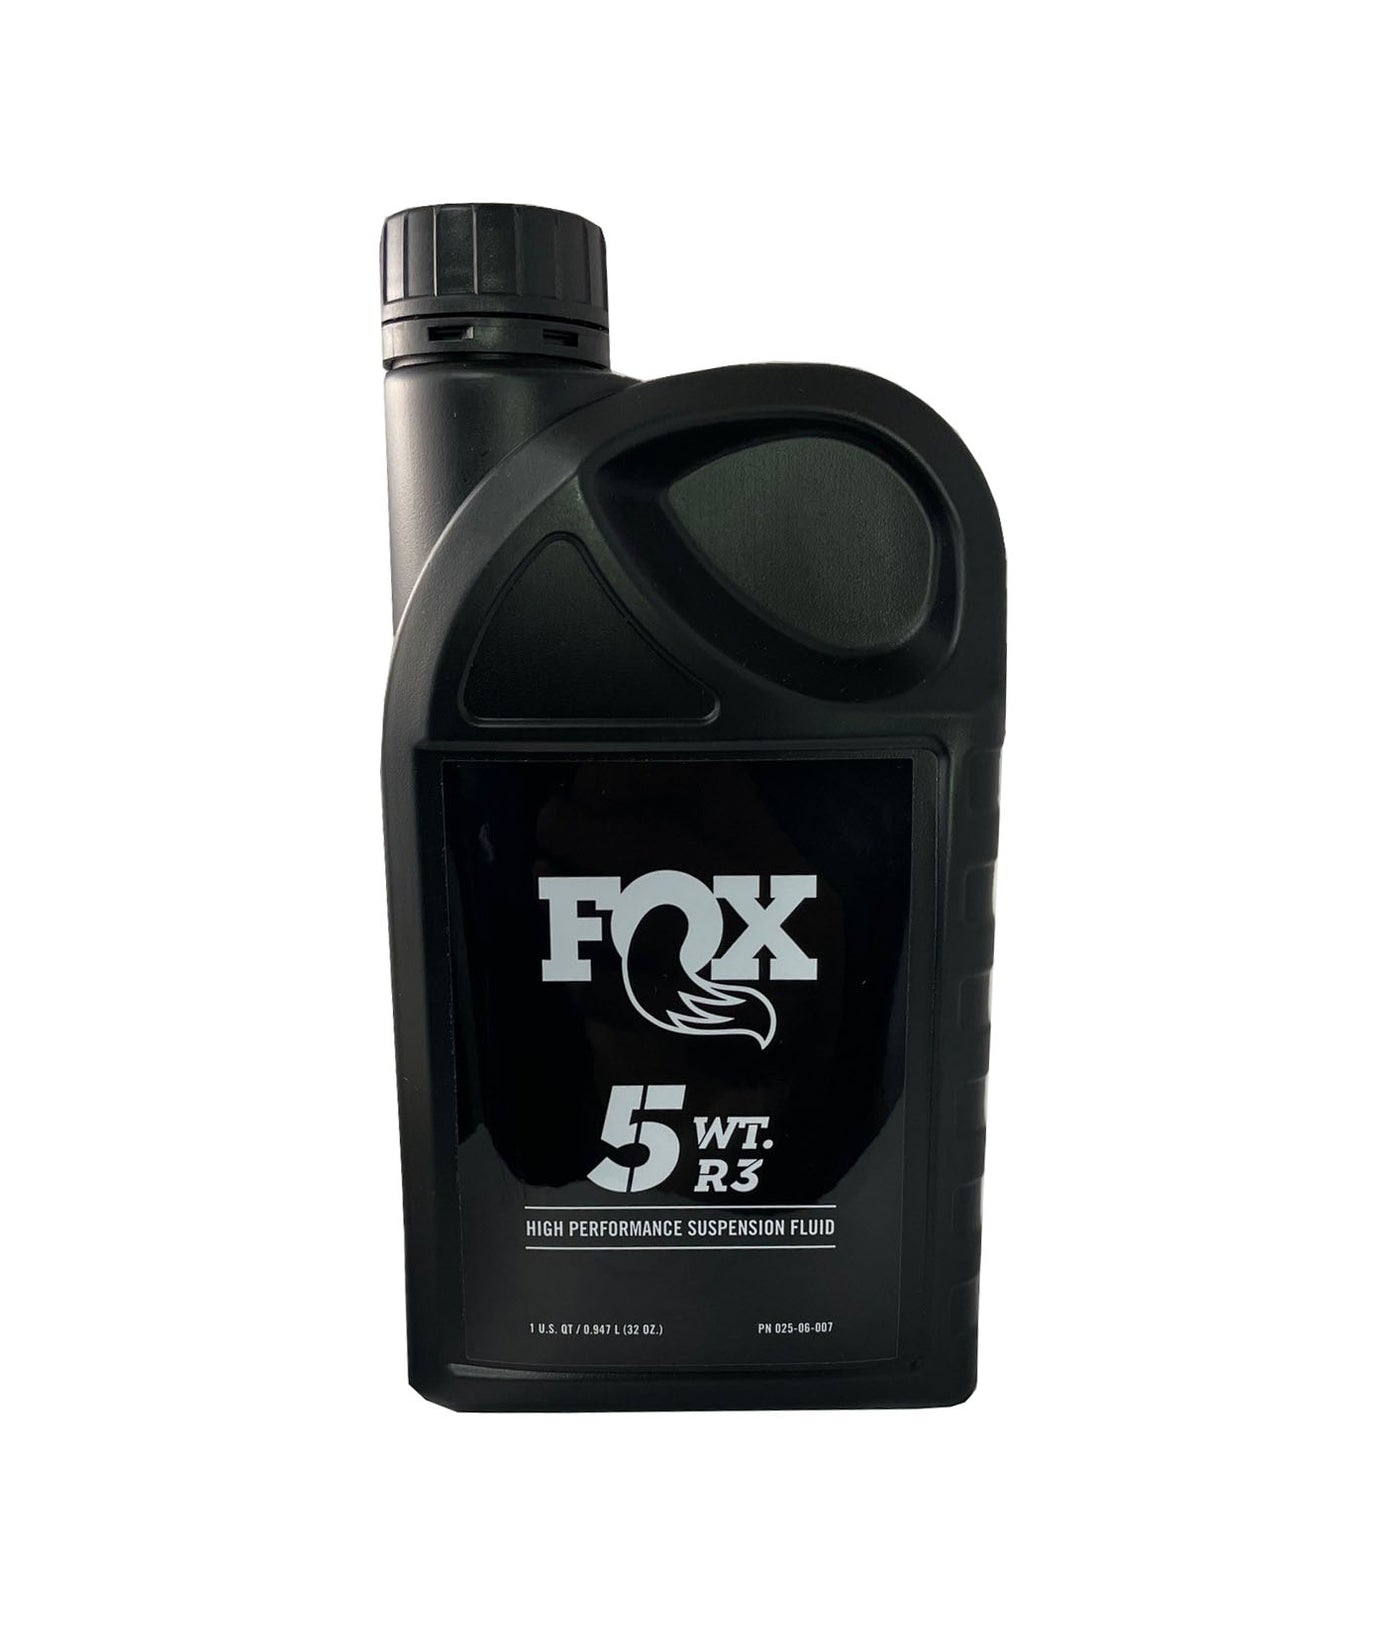 FOX 5wt. R3 High Performance Suspension Fluid / Oil 32oz  #025-06-007 1qt